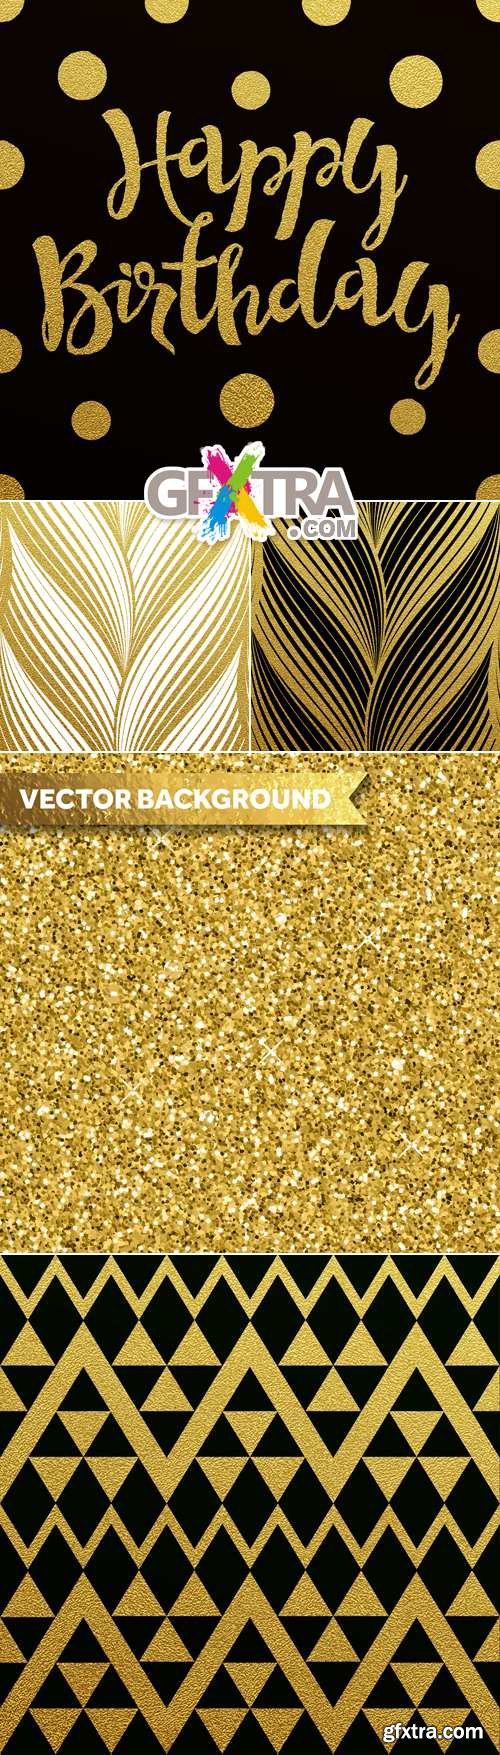 Golden Glittering Backgrounds Vector